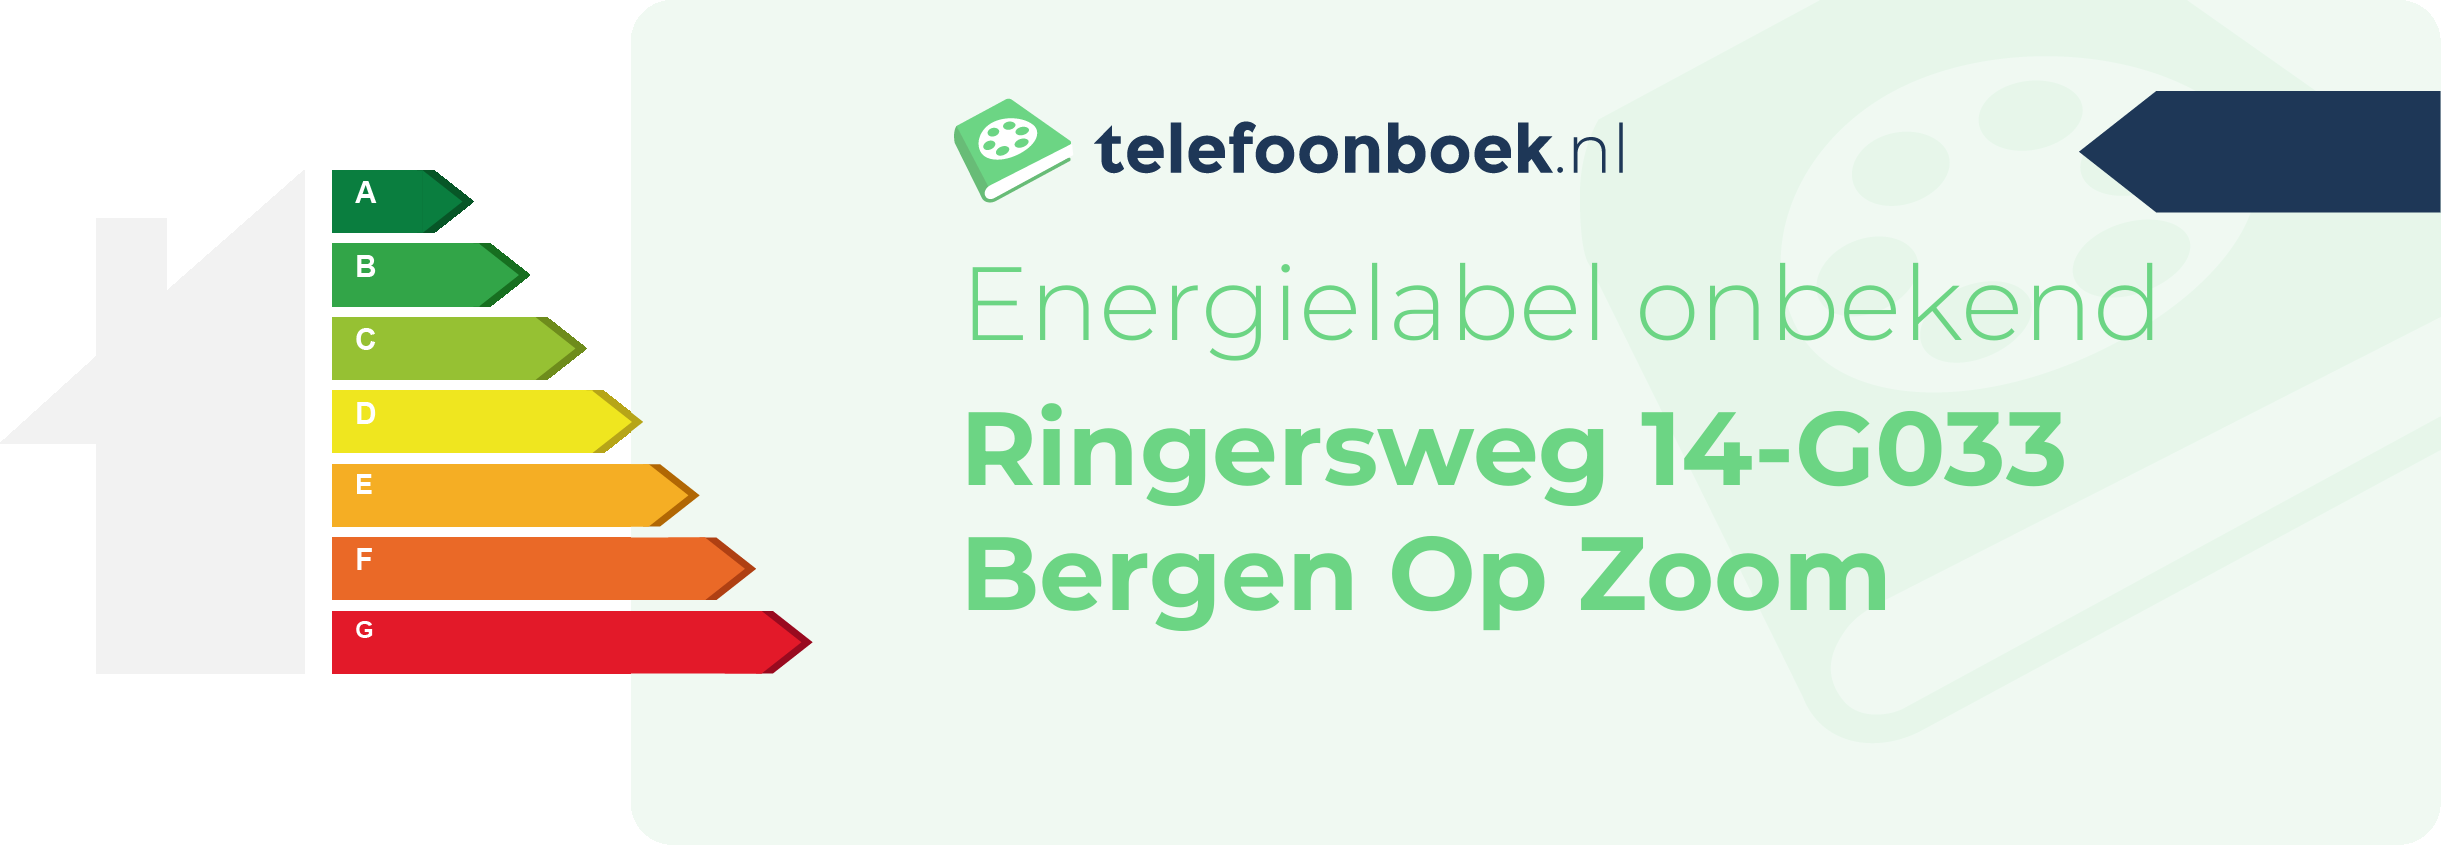 Energielabel Ringersweg 14-G033 Bergen Op Zoom